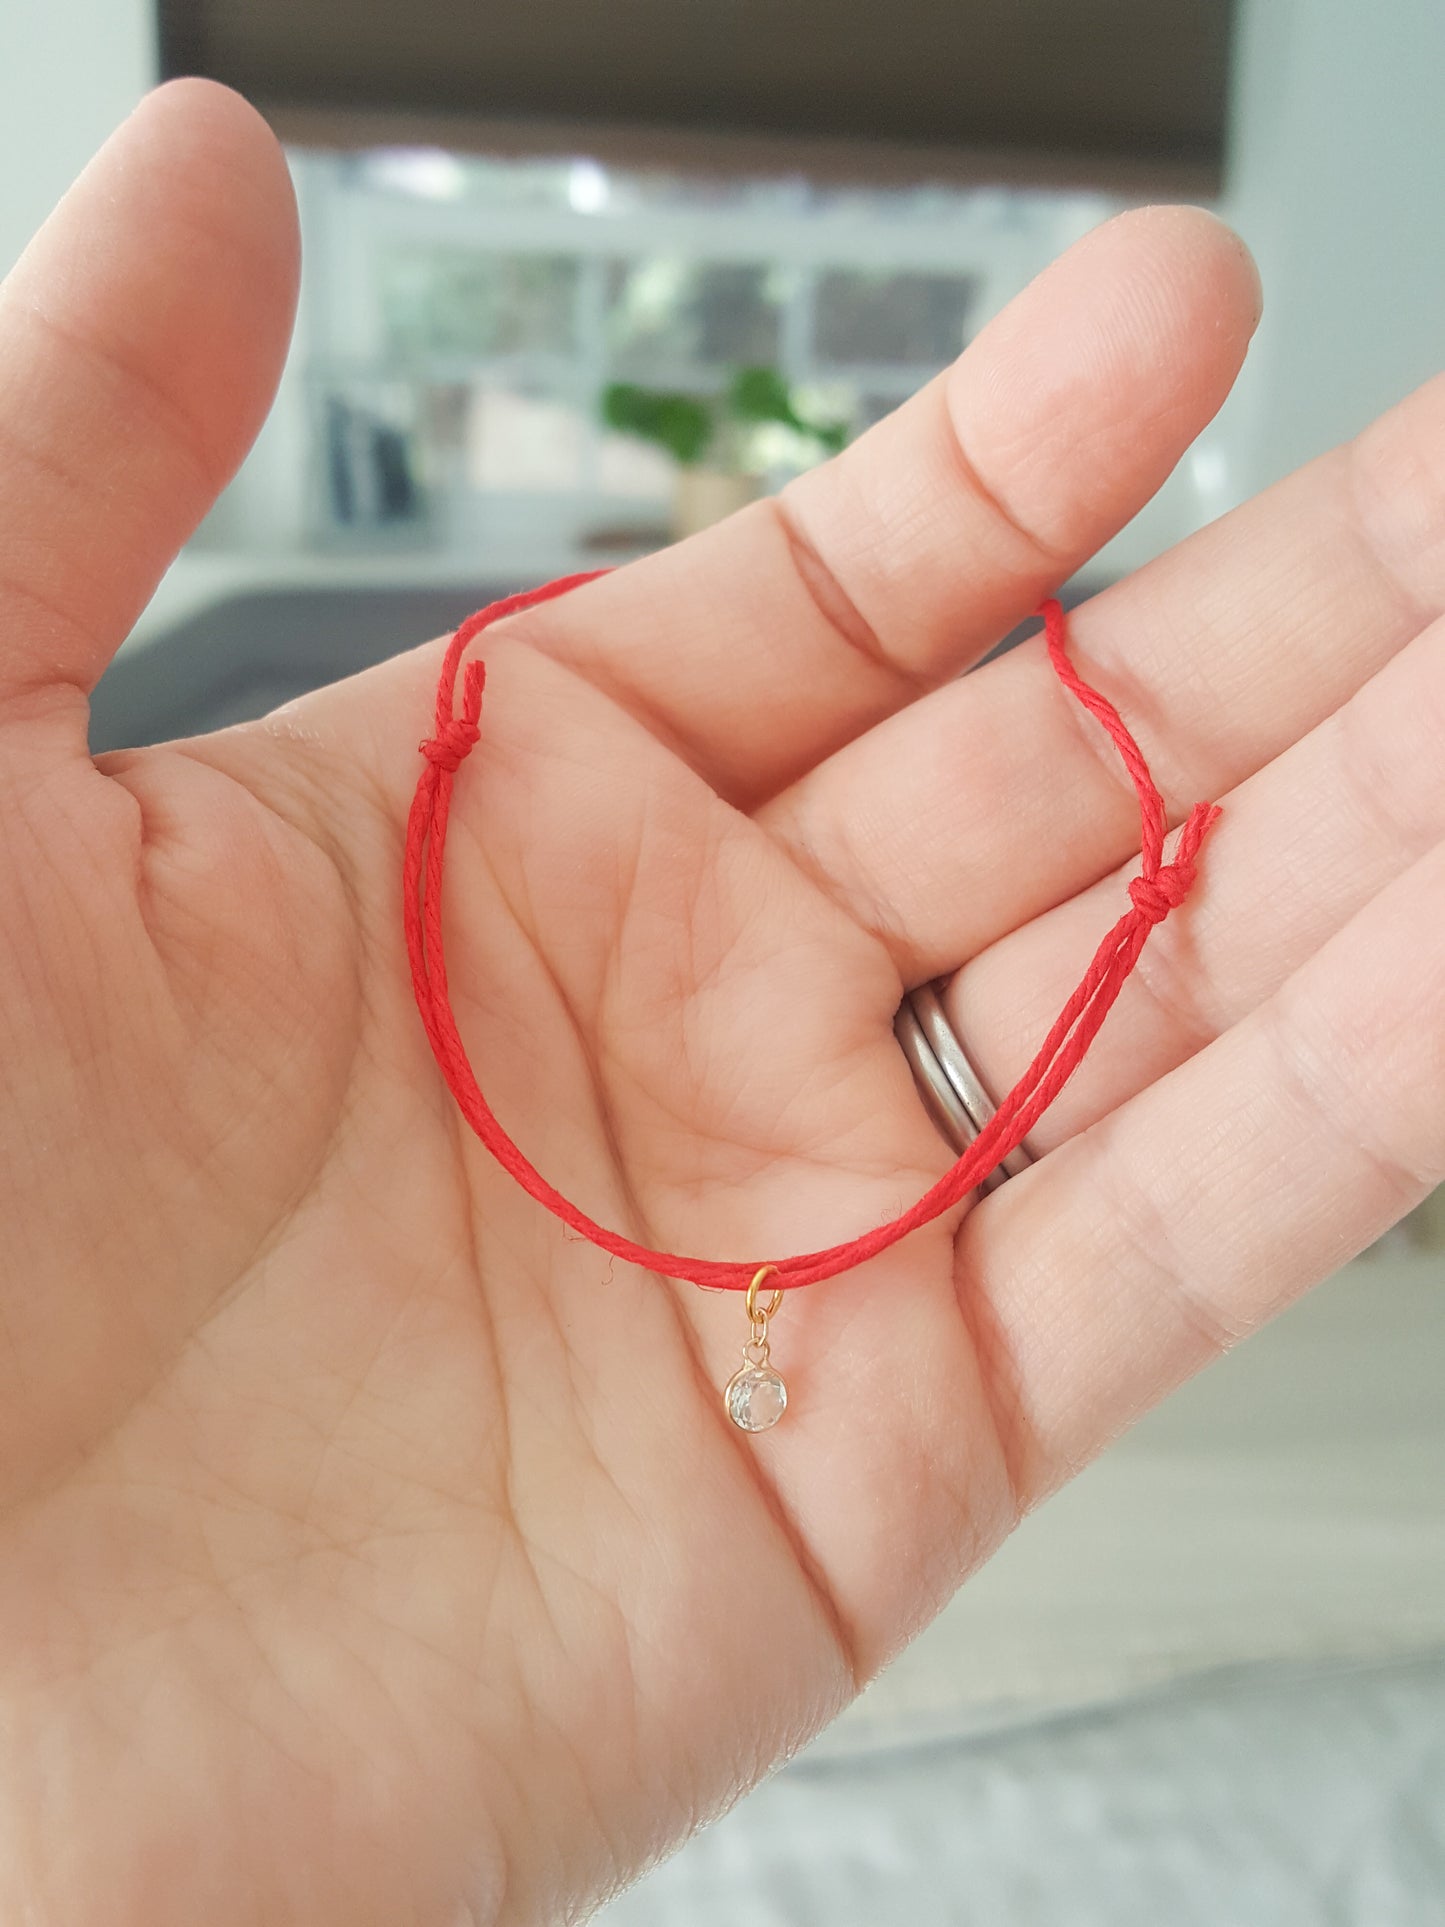 SELF LOVE 14K Solid Gold with White Topaz Red String Bracelet | Minimalist Handmade Boho | Vegan (not silk), Hemp twine. April birthstone